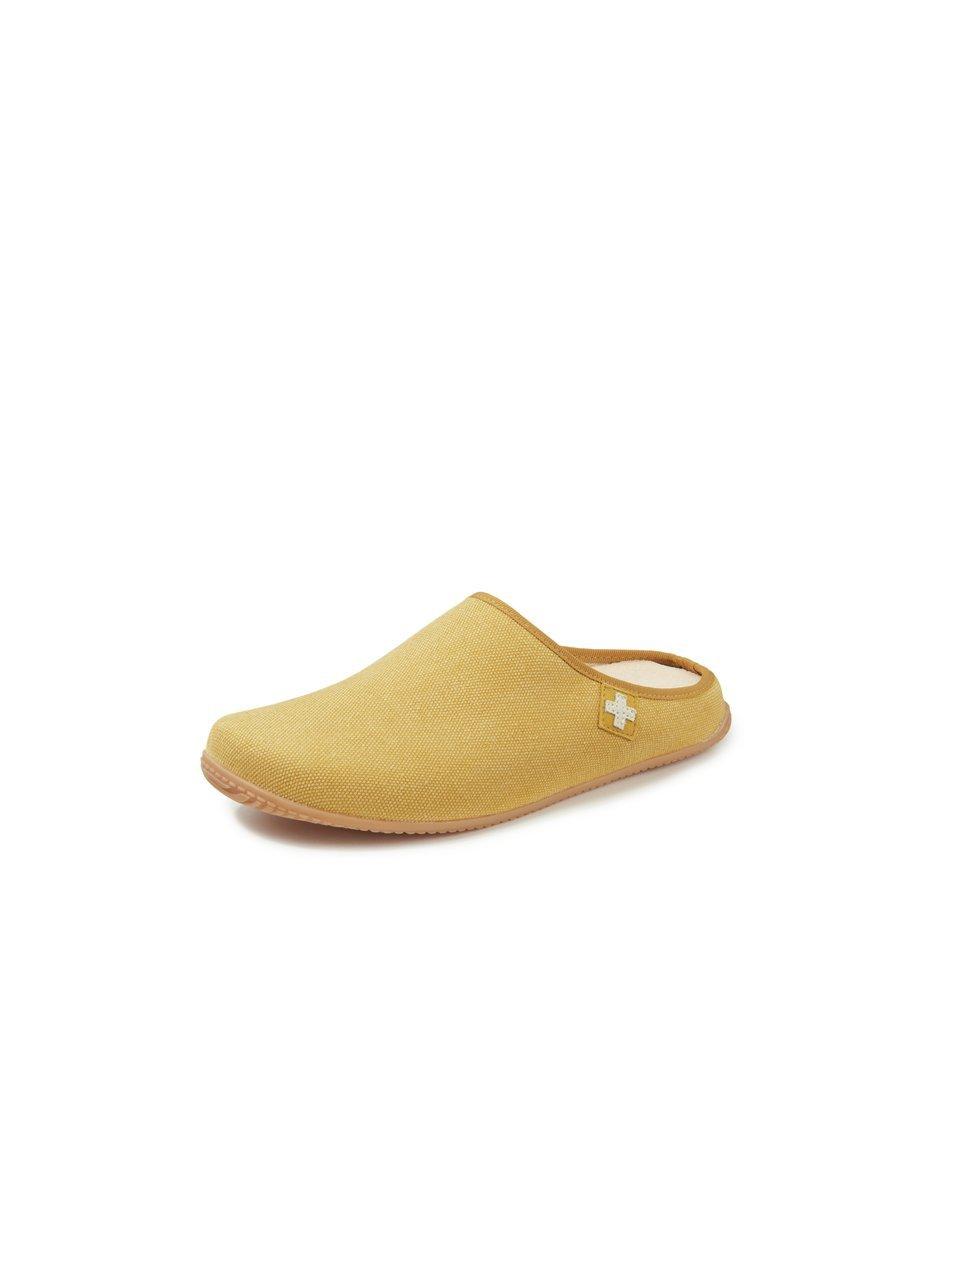 Pantoffels textielmateriaal Van Living Kitzbühel geel